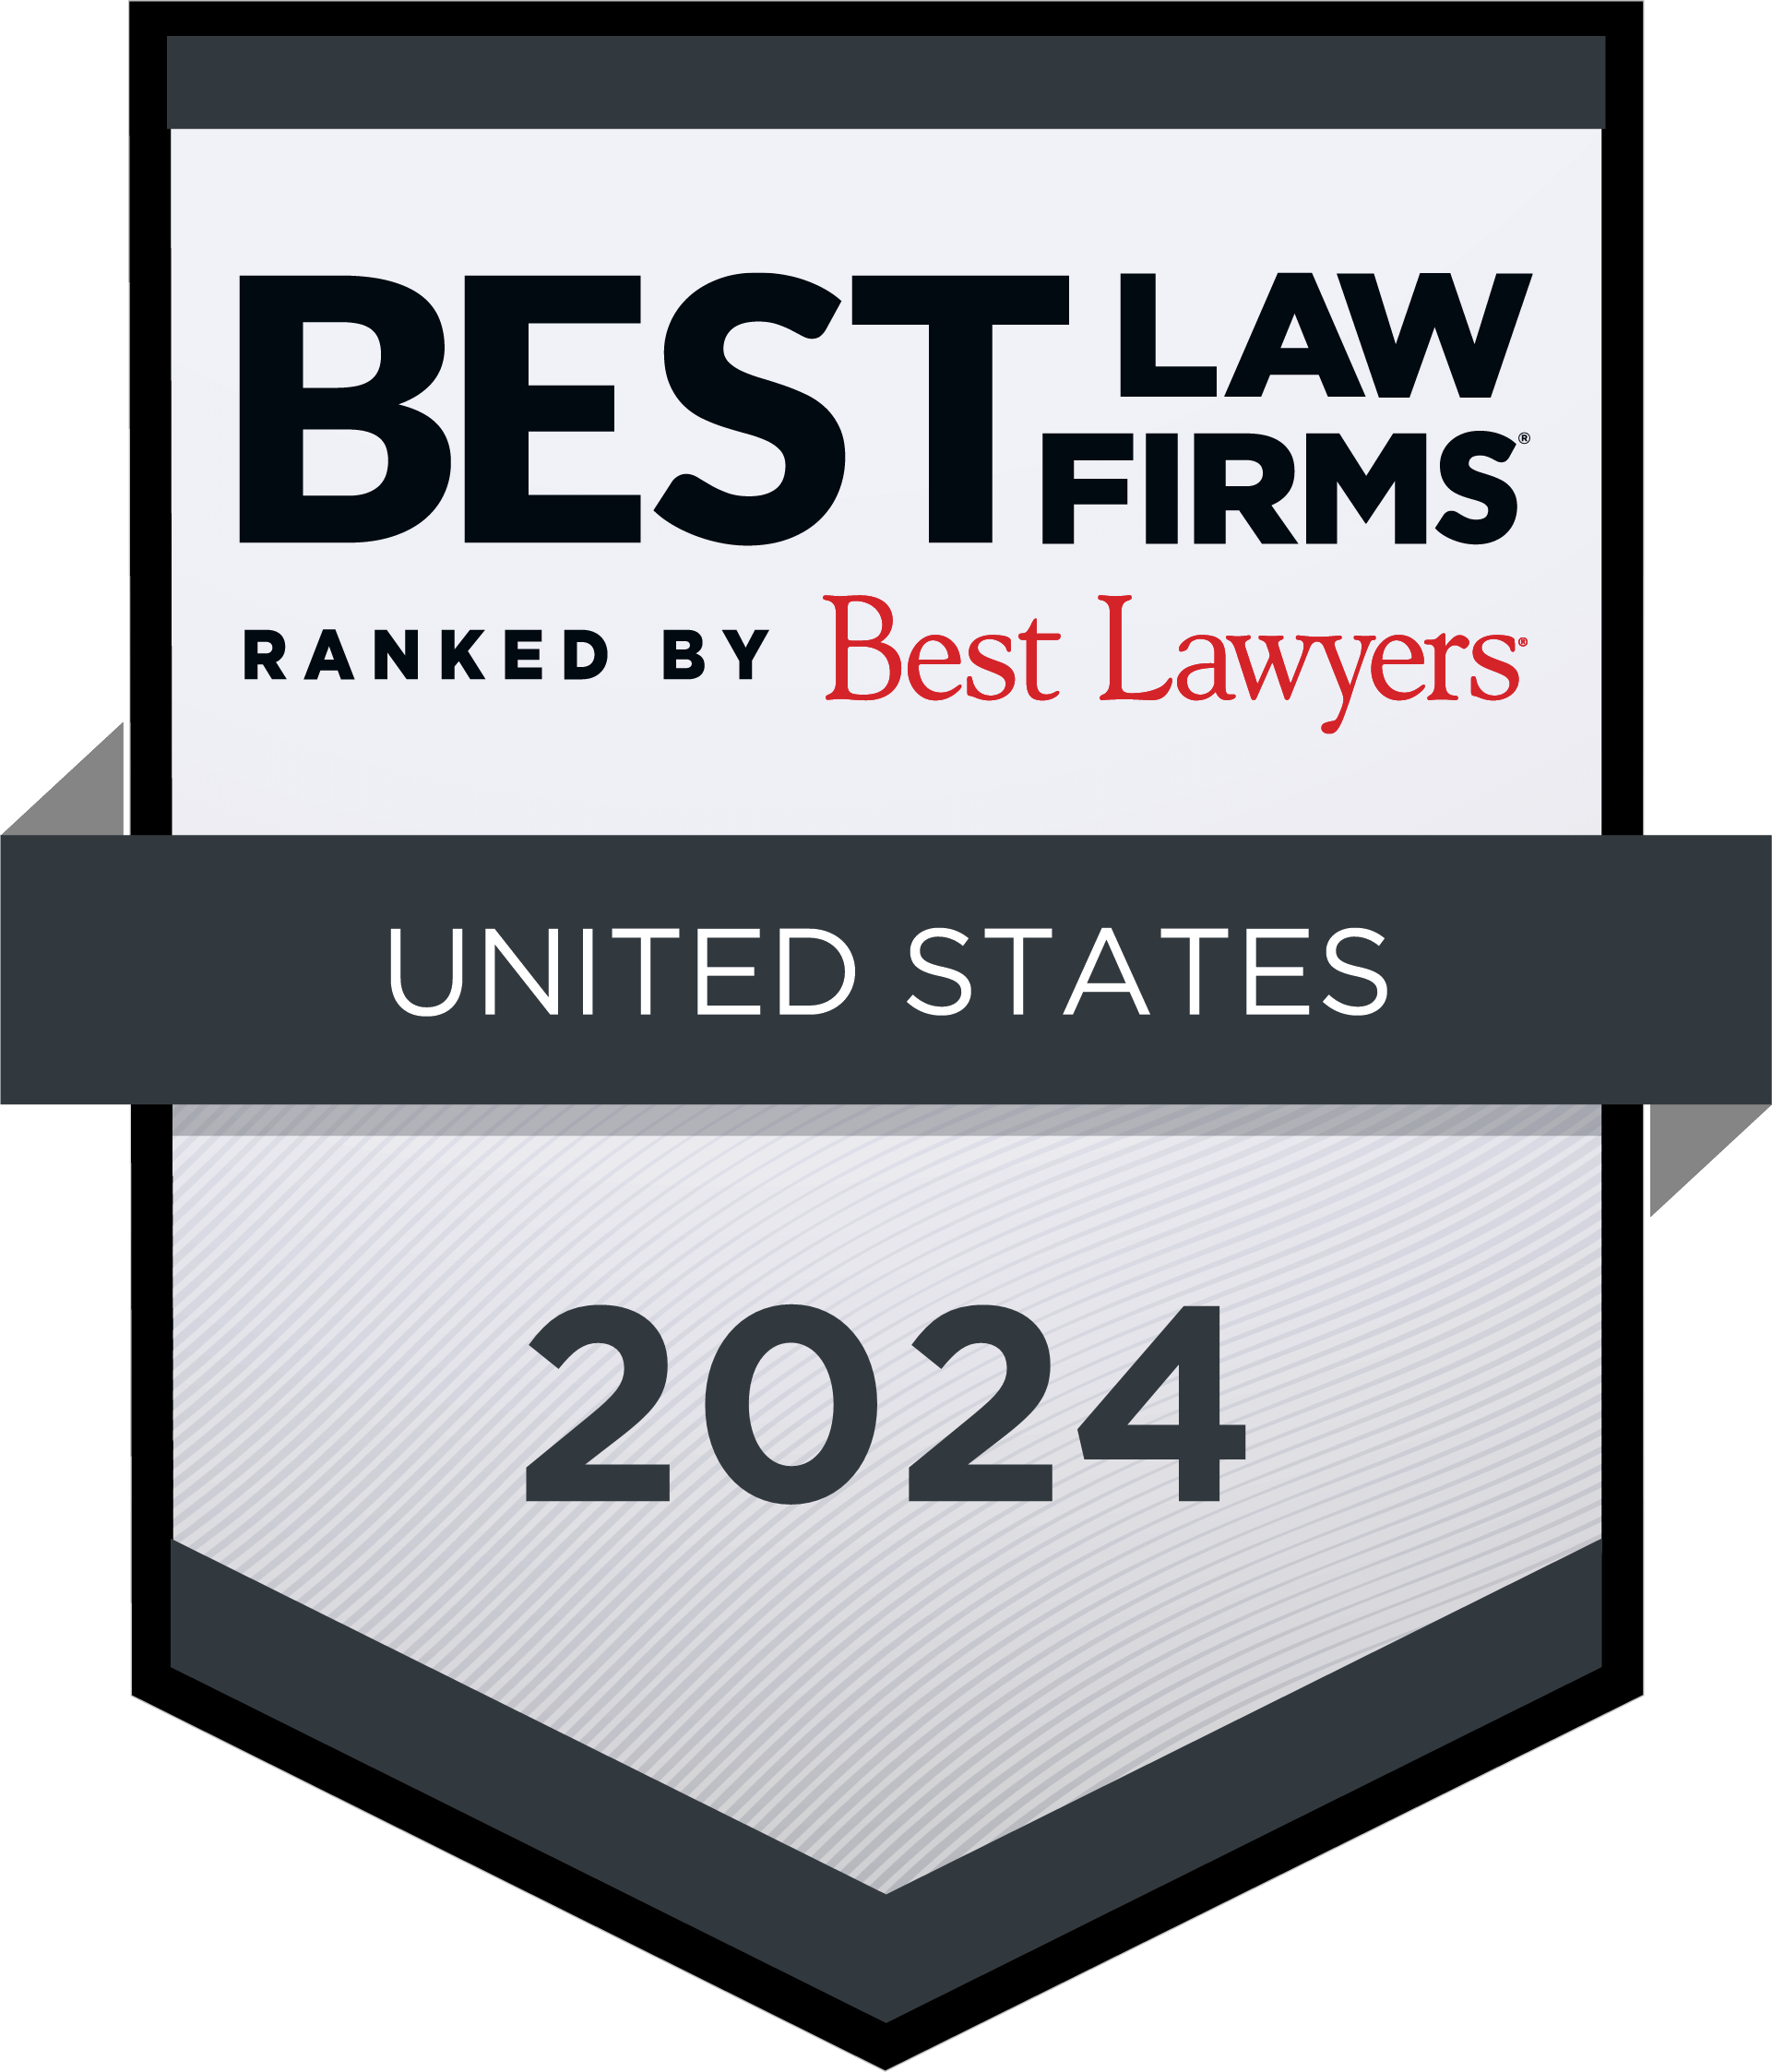 U.S. News – Best Lawyers® “Best Law Firms”